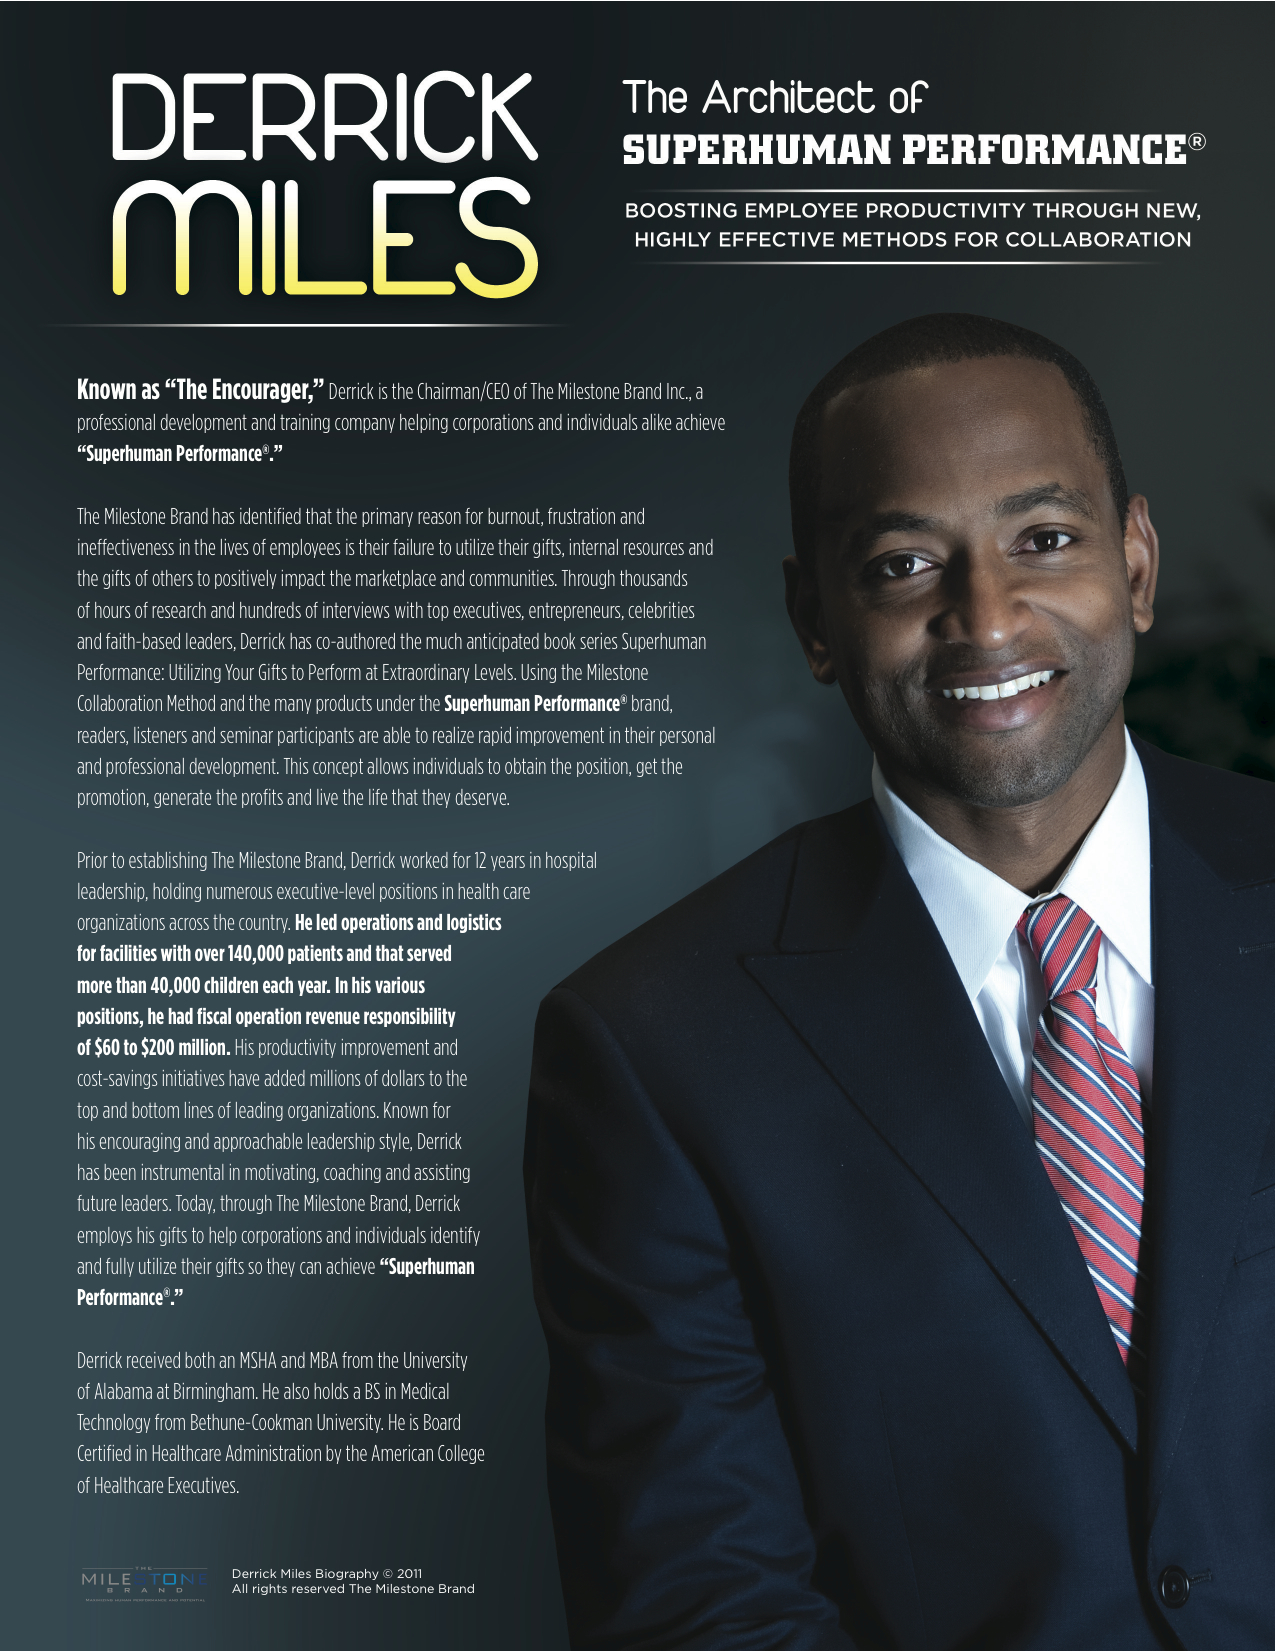 Miles pro. Biography for adviser.